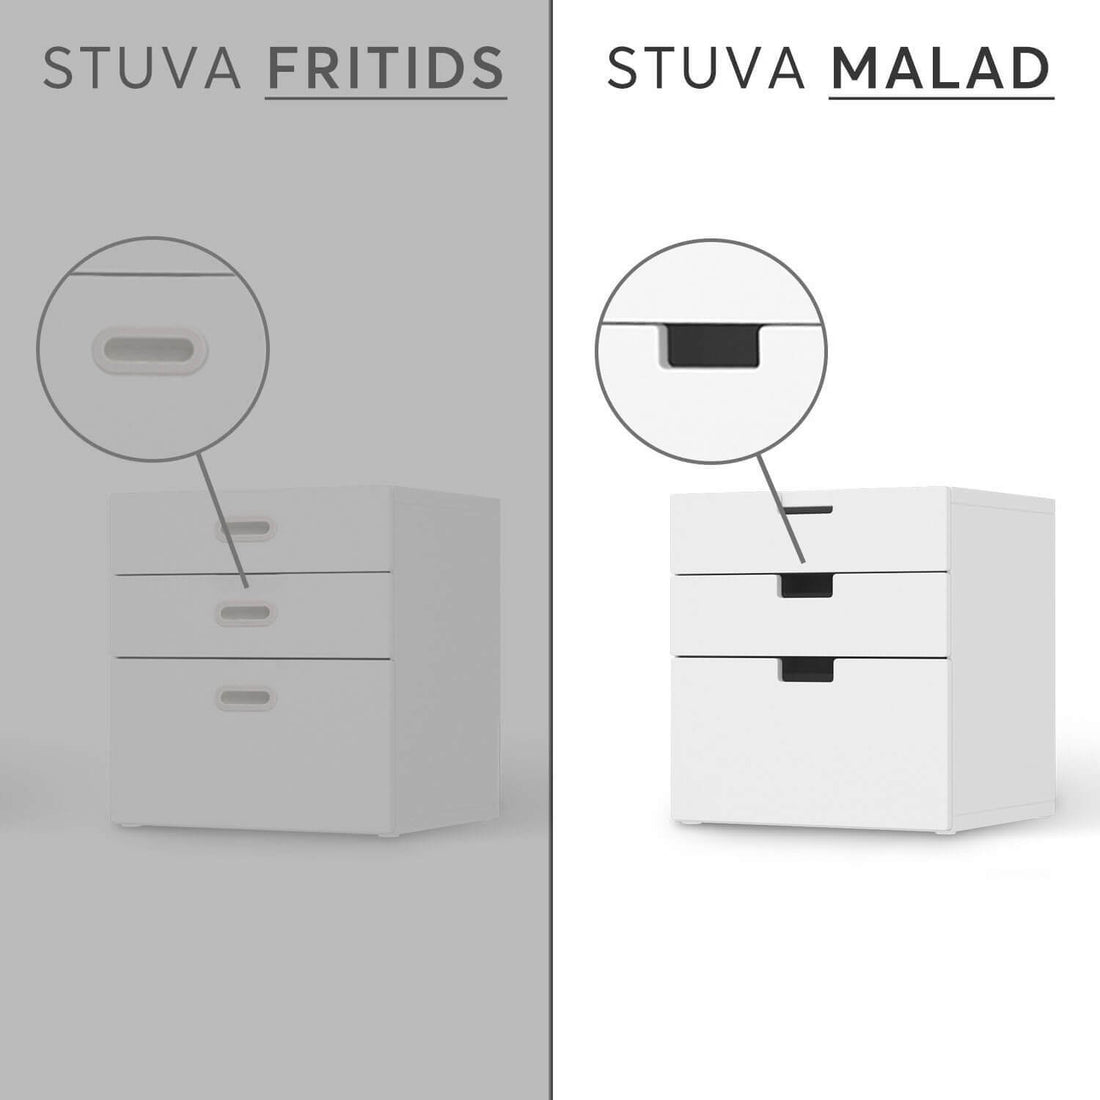 Folie für Möbel IKEA Stuva / Malad Kommode - 3 Schubladen - Design: Mountain Giraffe